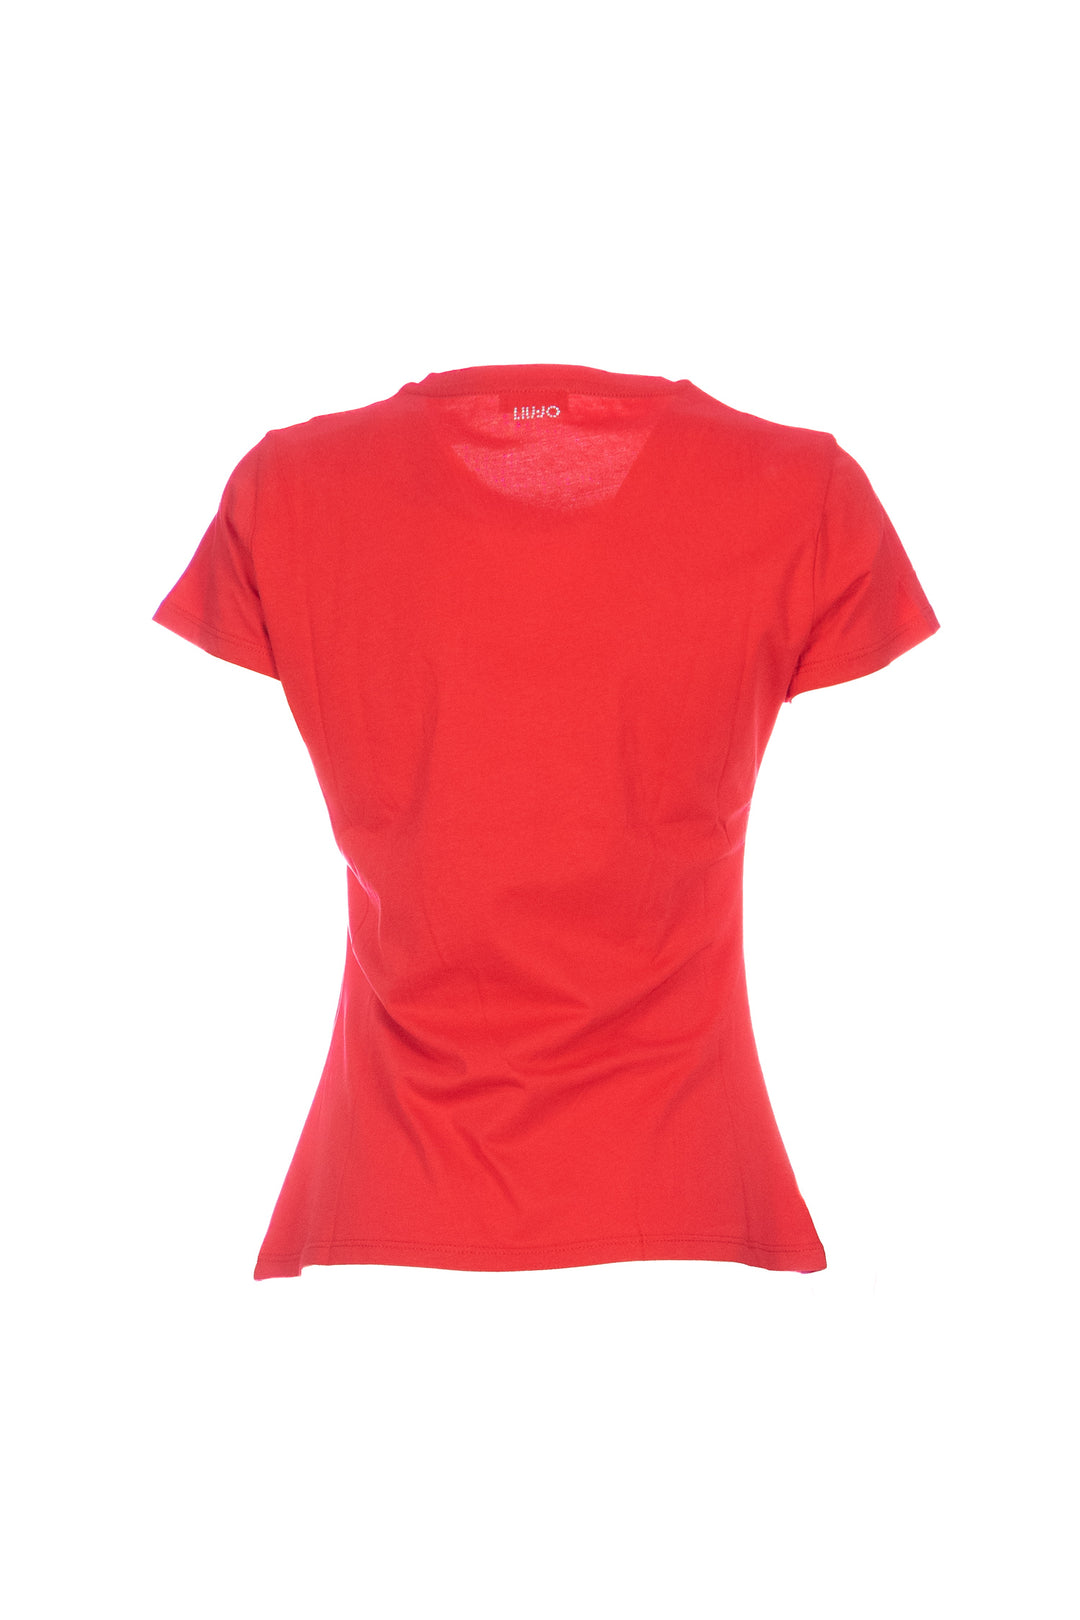 LIU JO T-shirt rossa in cotone Koala con strass - Mancinelli 1954